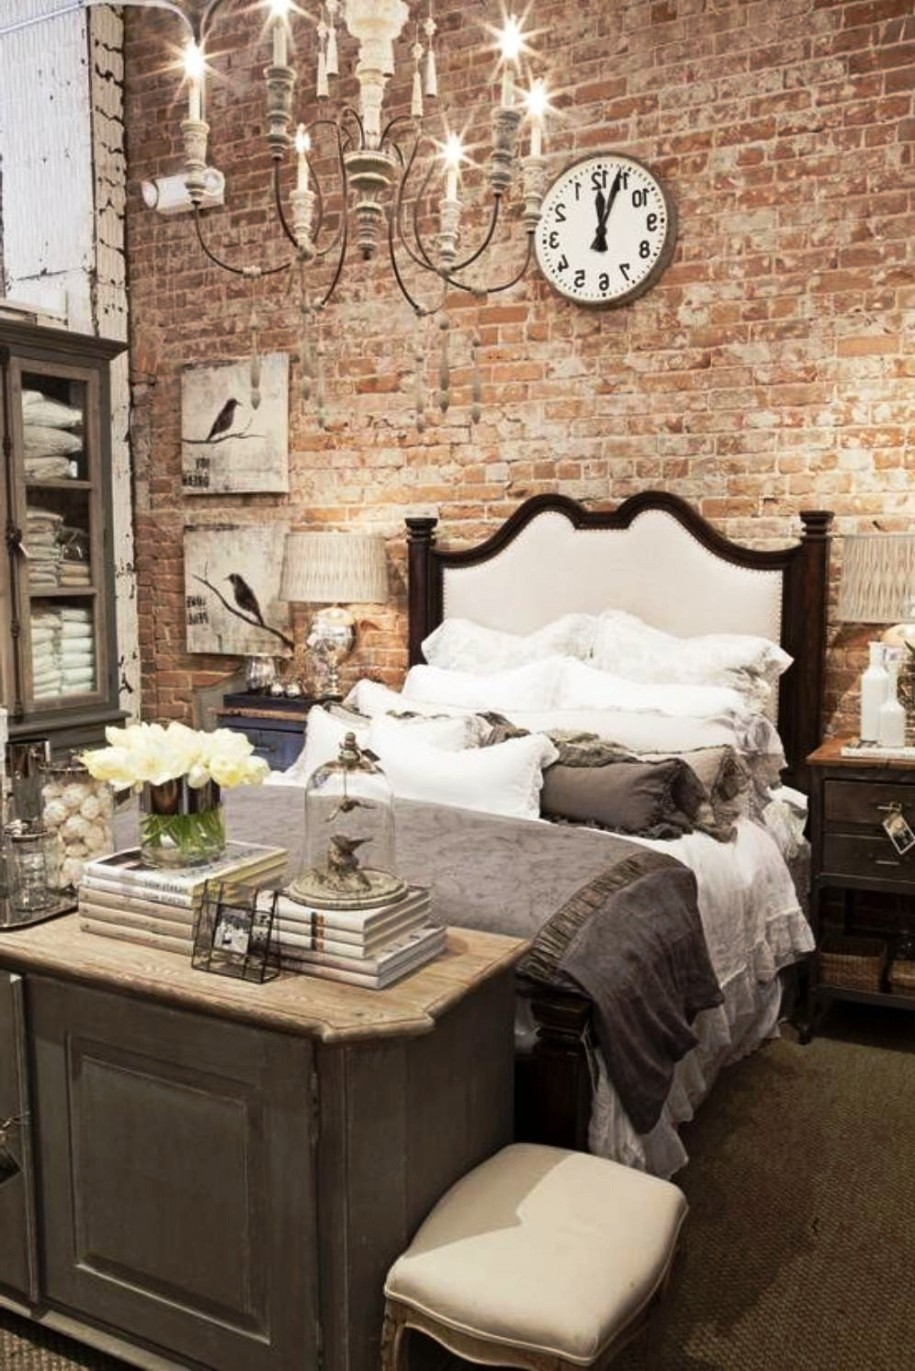 19-Rustic Bedroom Ideas